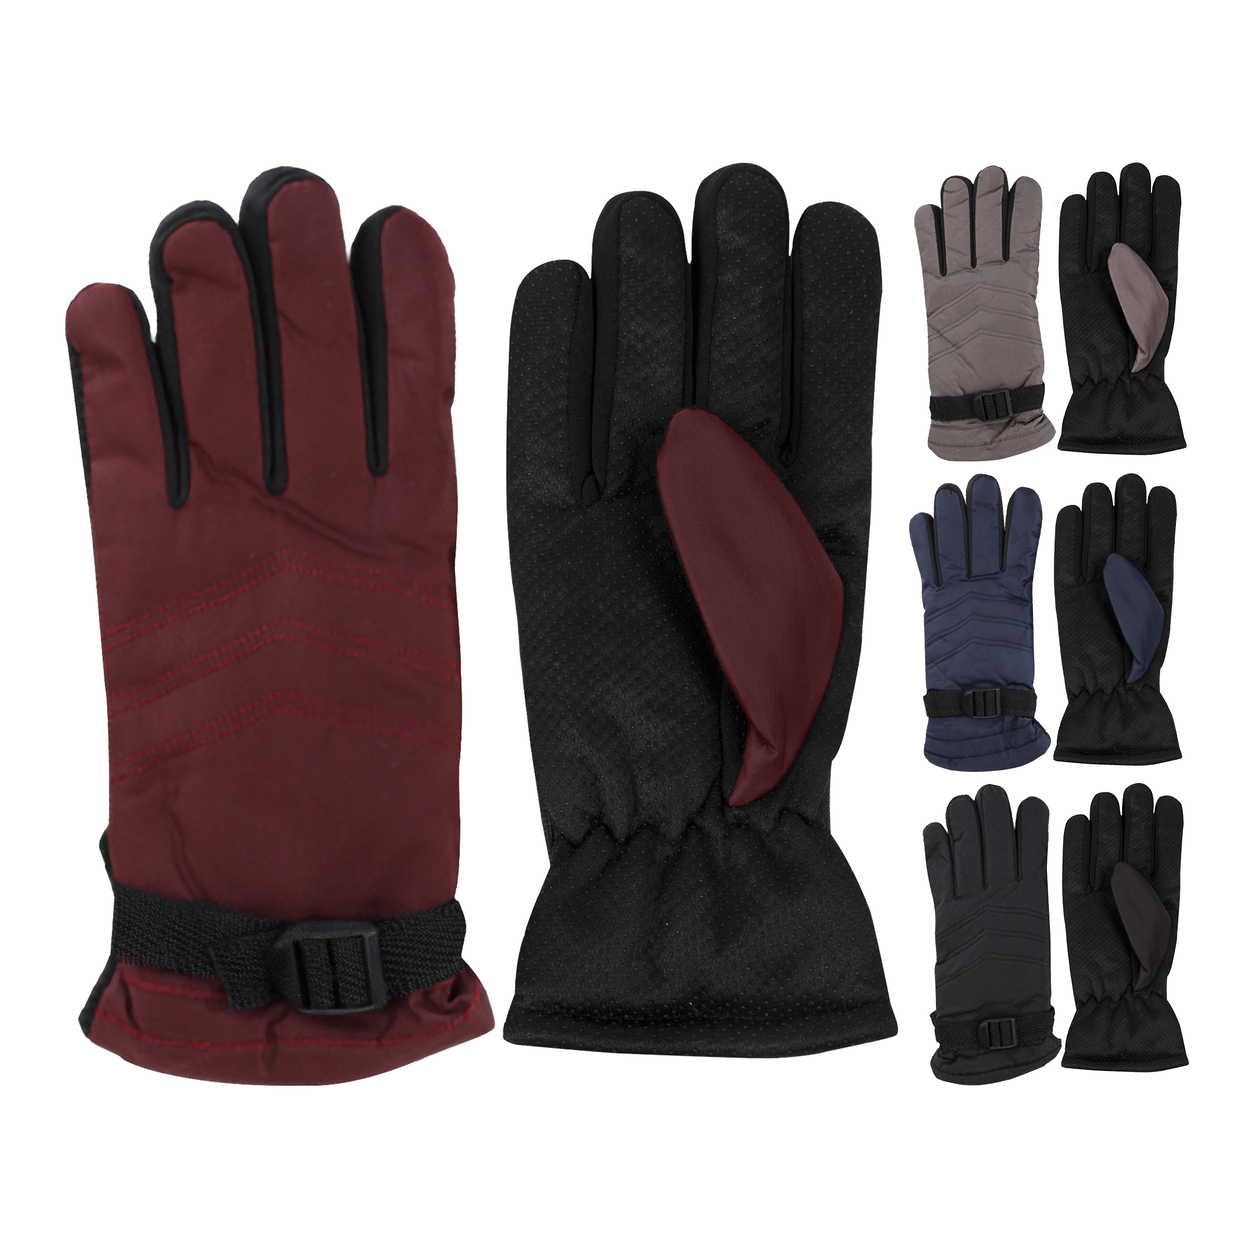 2-Pairs Women's Cozy Fur Lined Snow Ski Warm Winter Gloves - Black/red